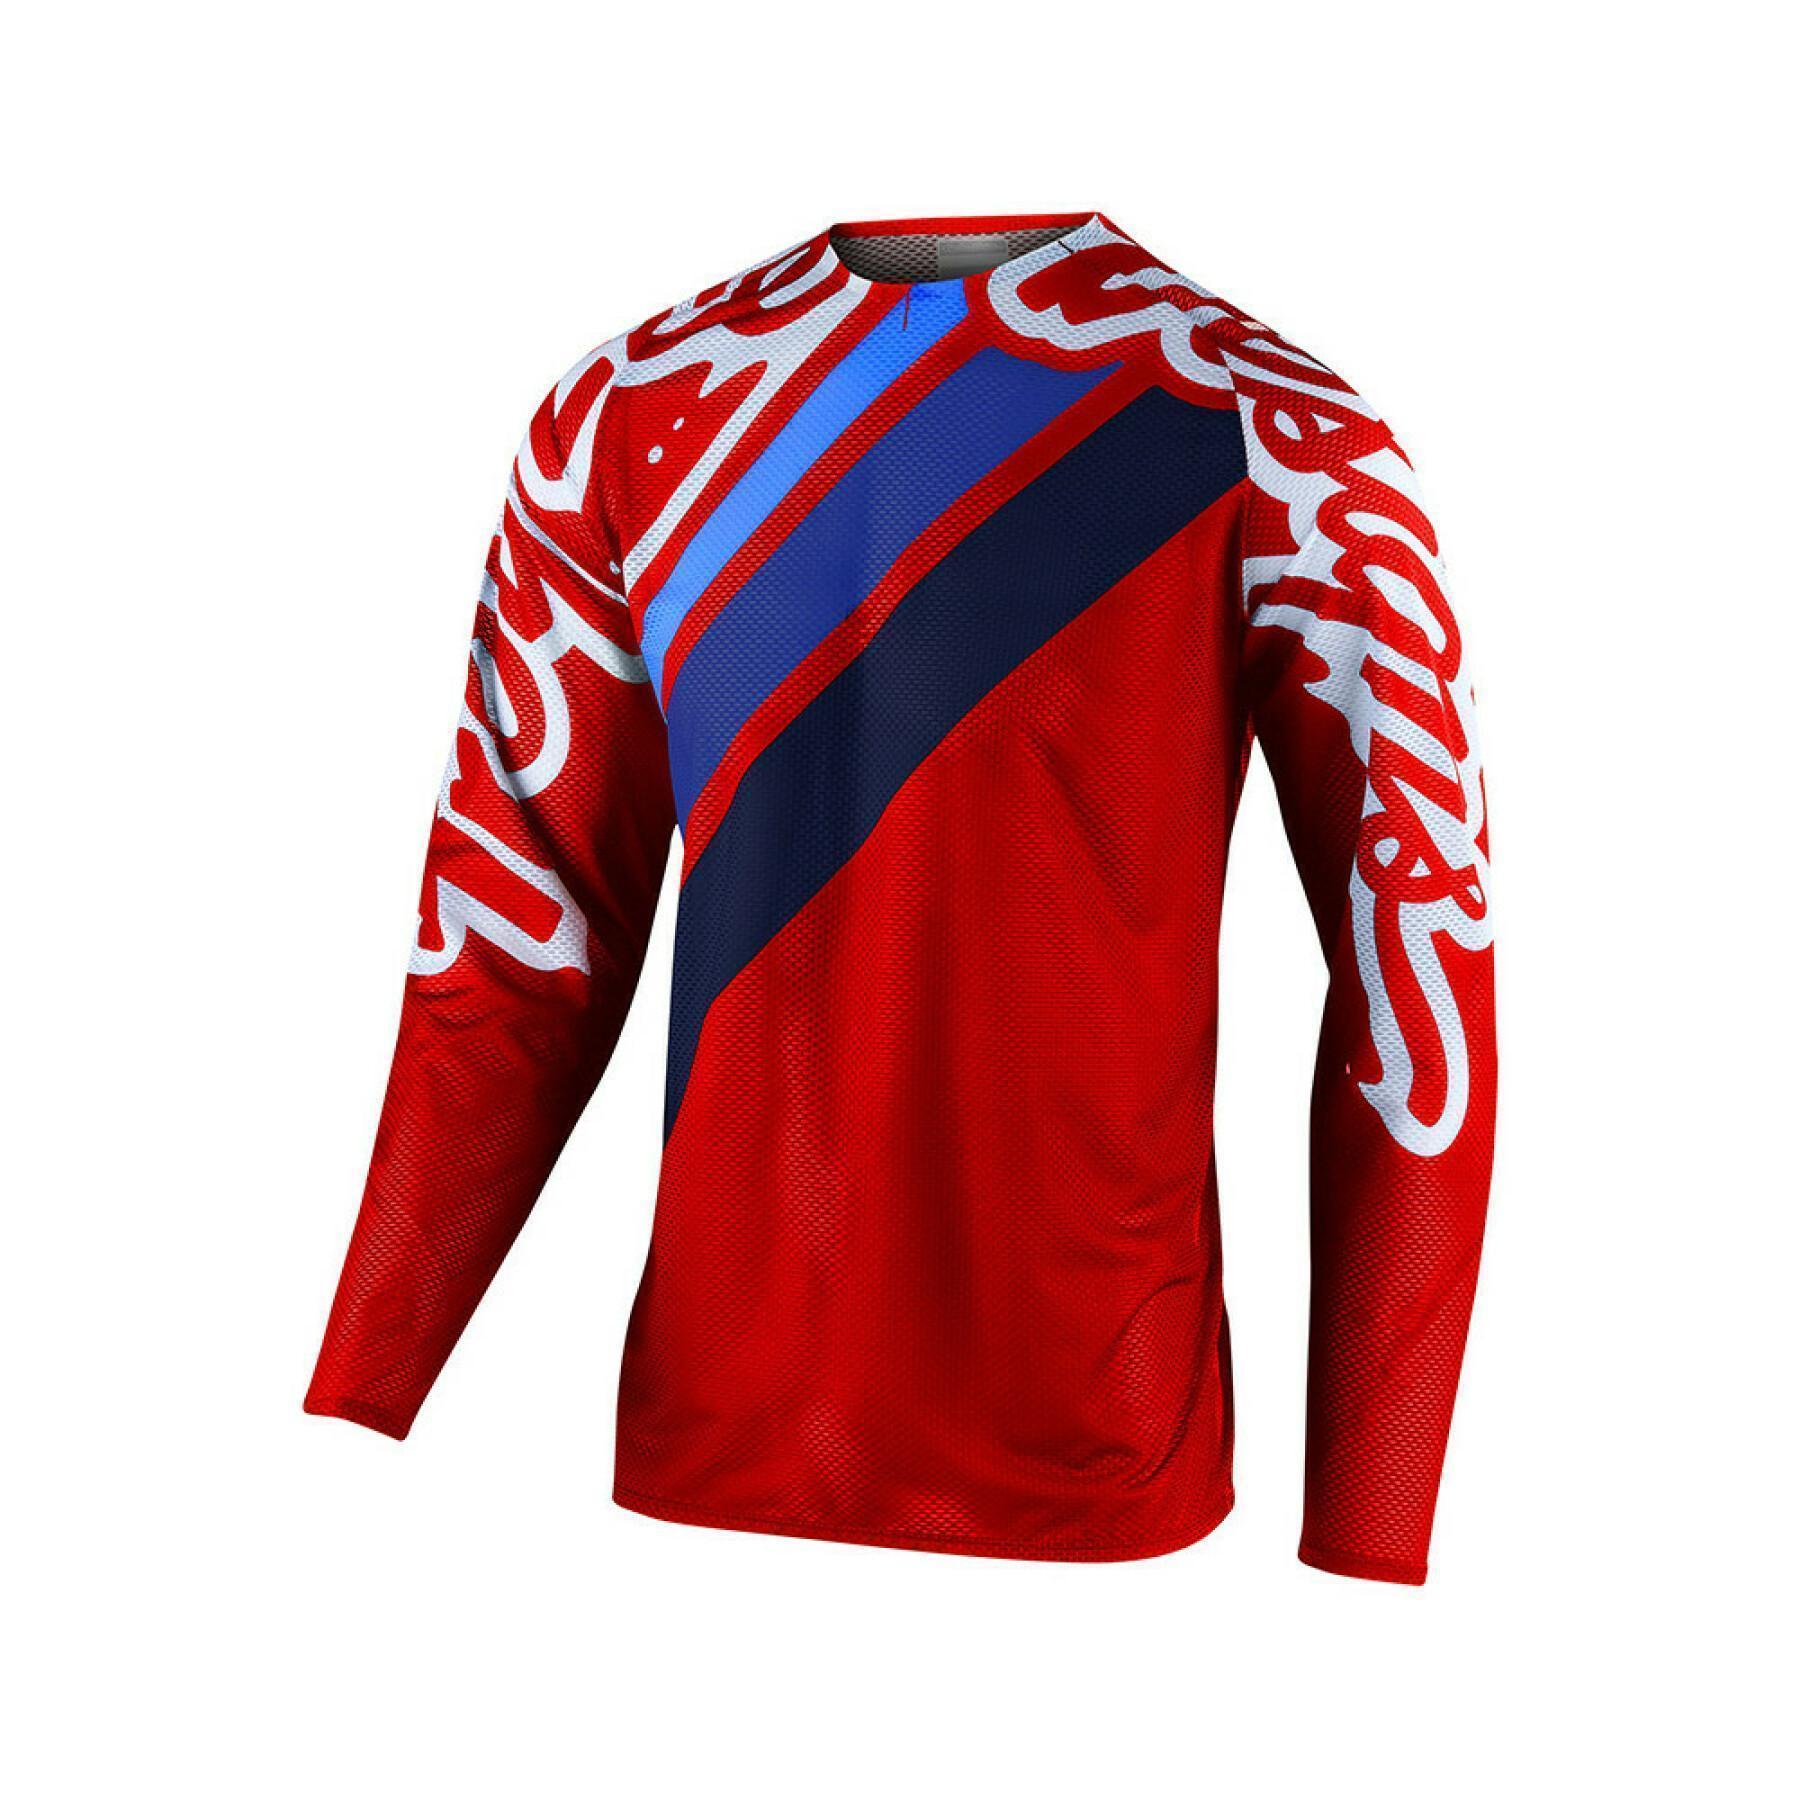 Ultra jersey Troy Lee Designs SE Pro Air seca 2.2